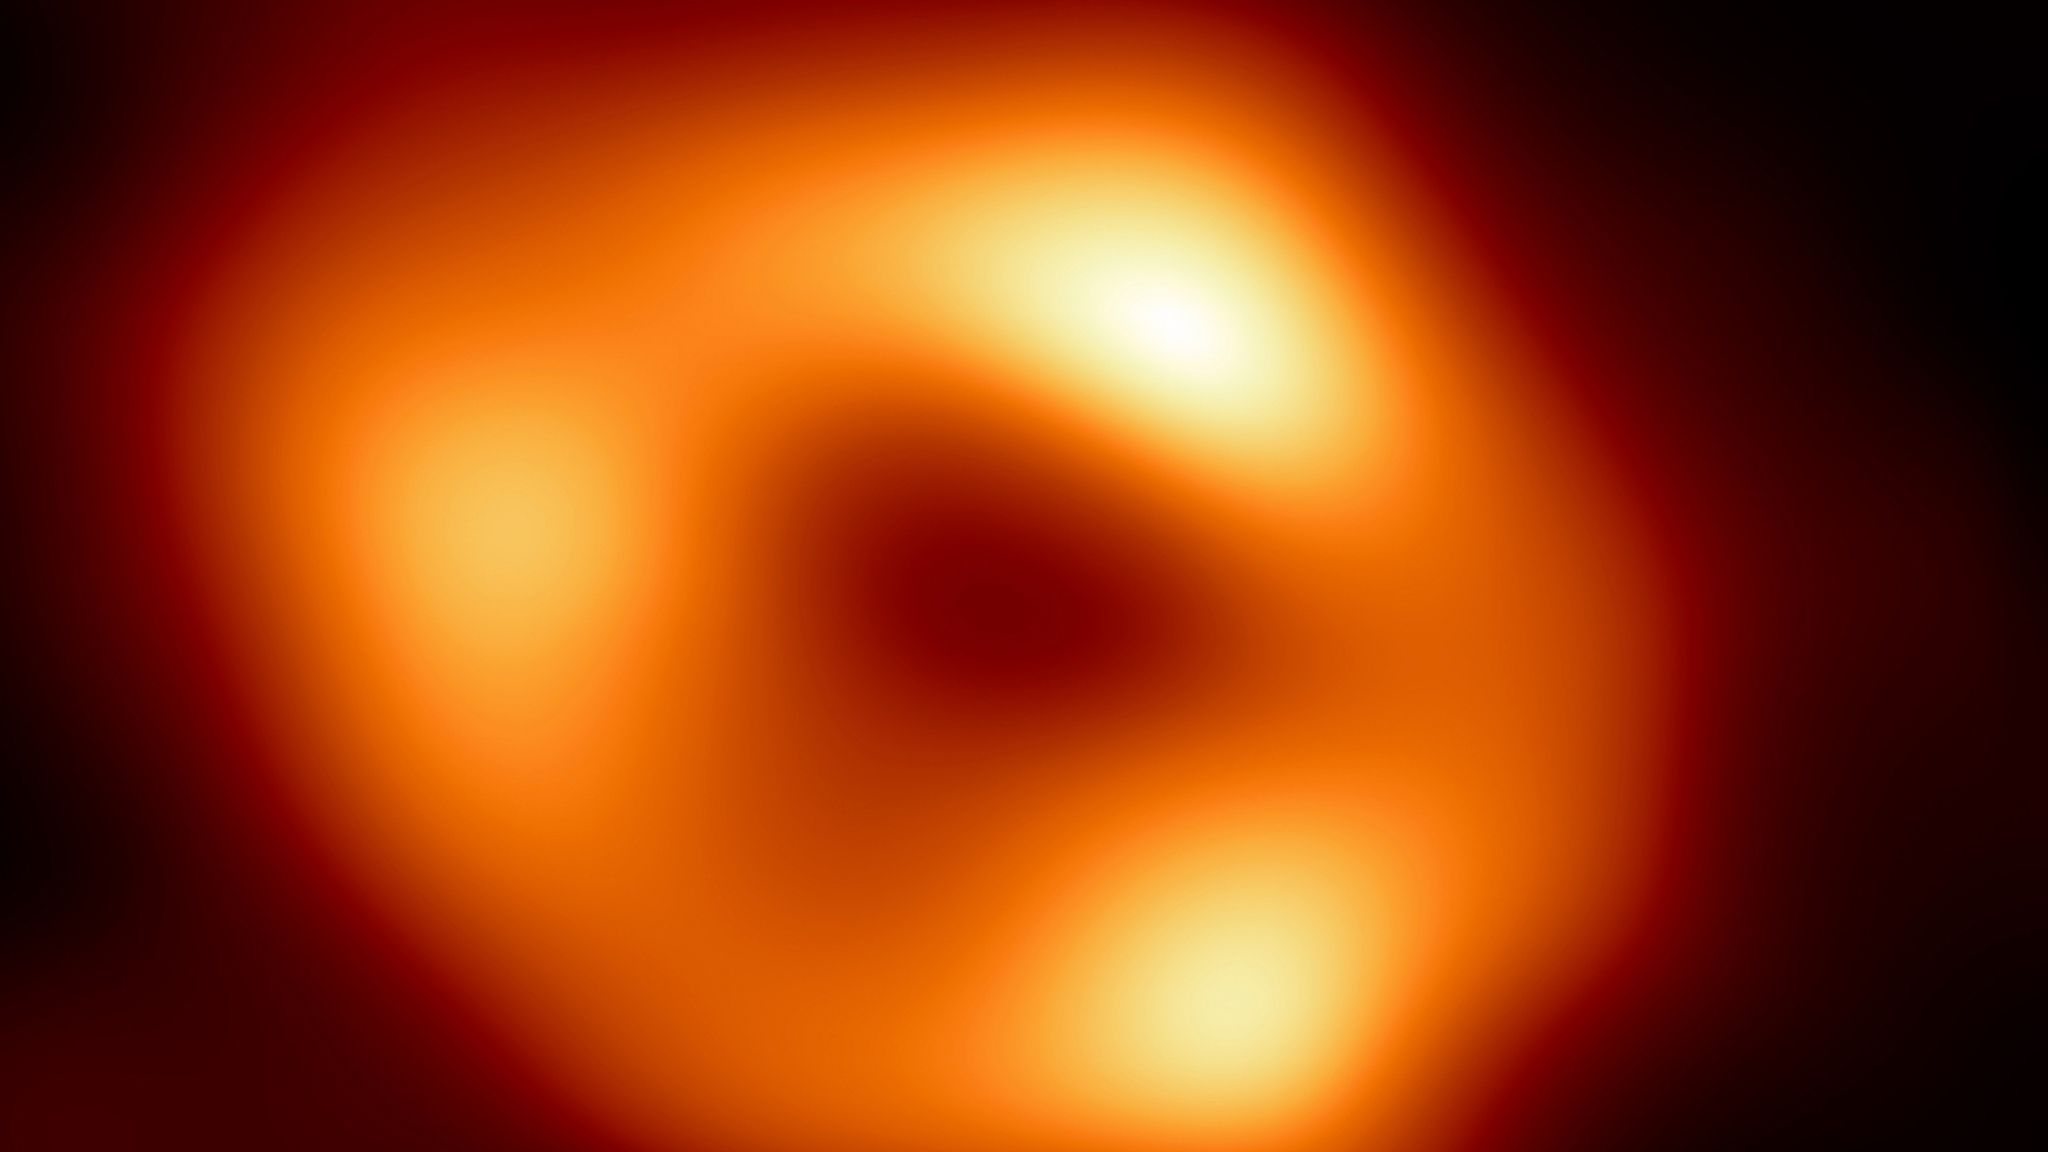 center of milky way galaxy black hole